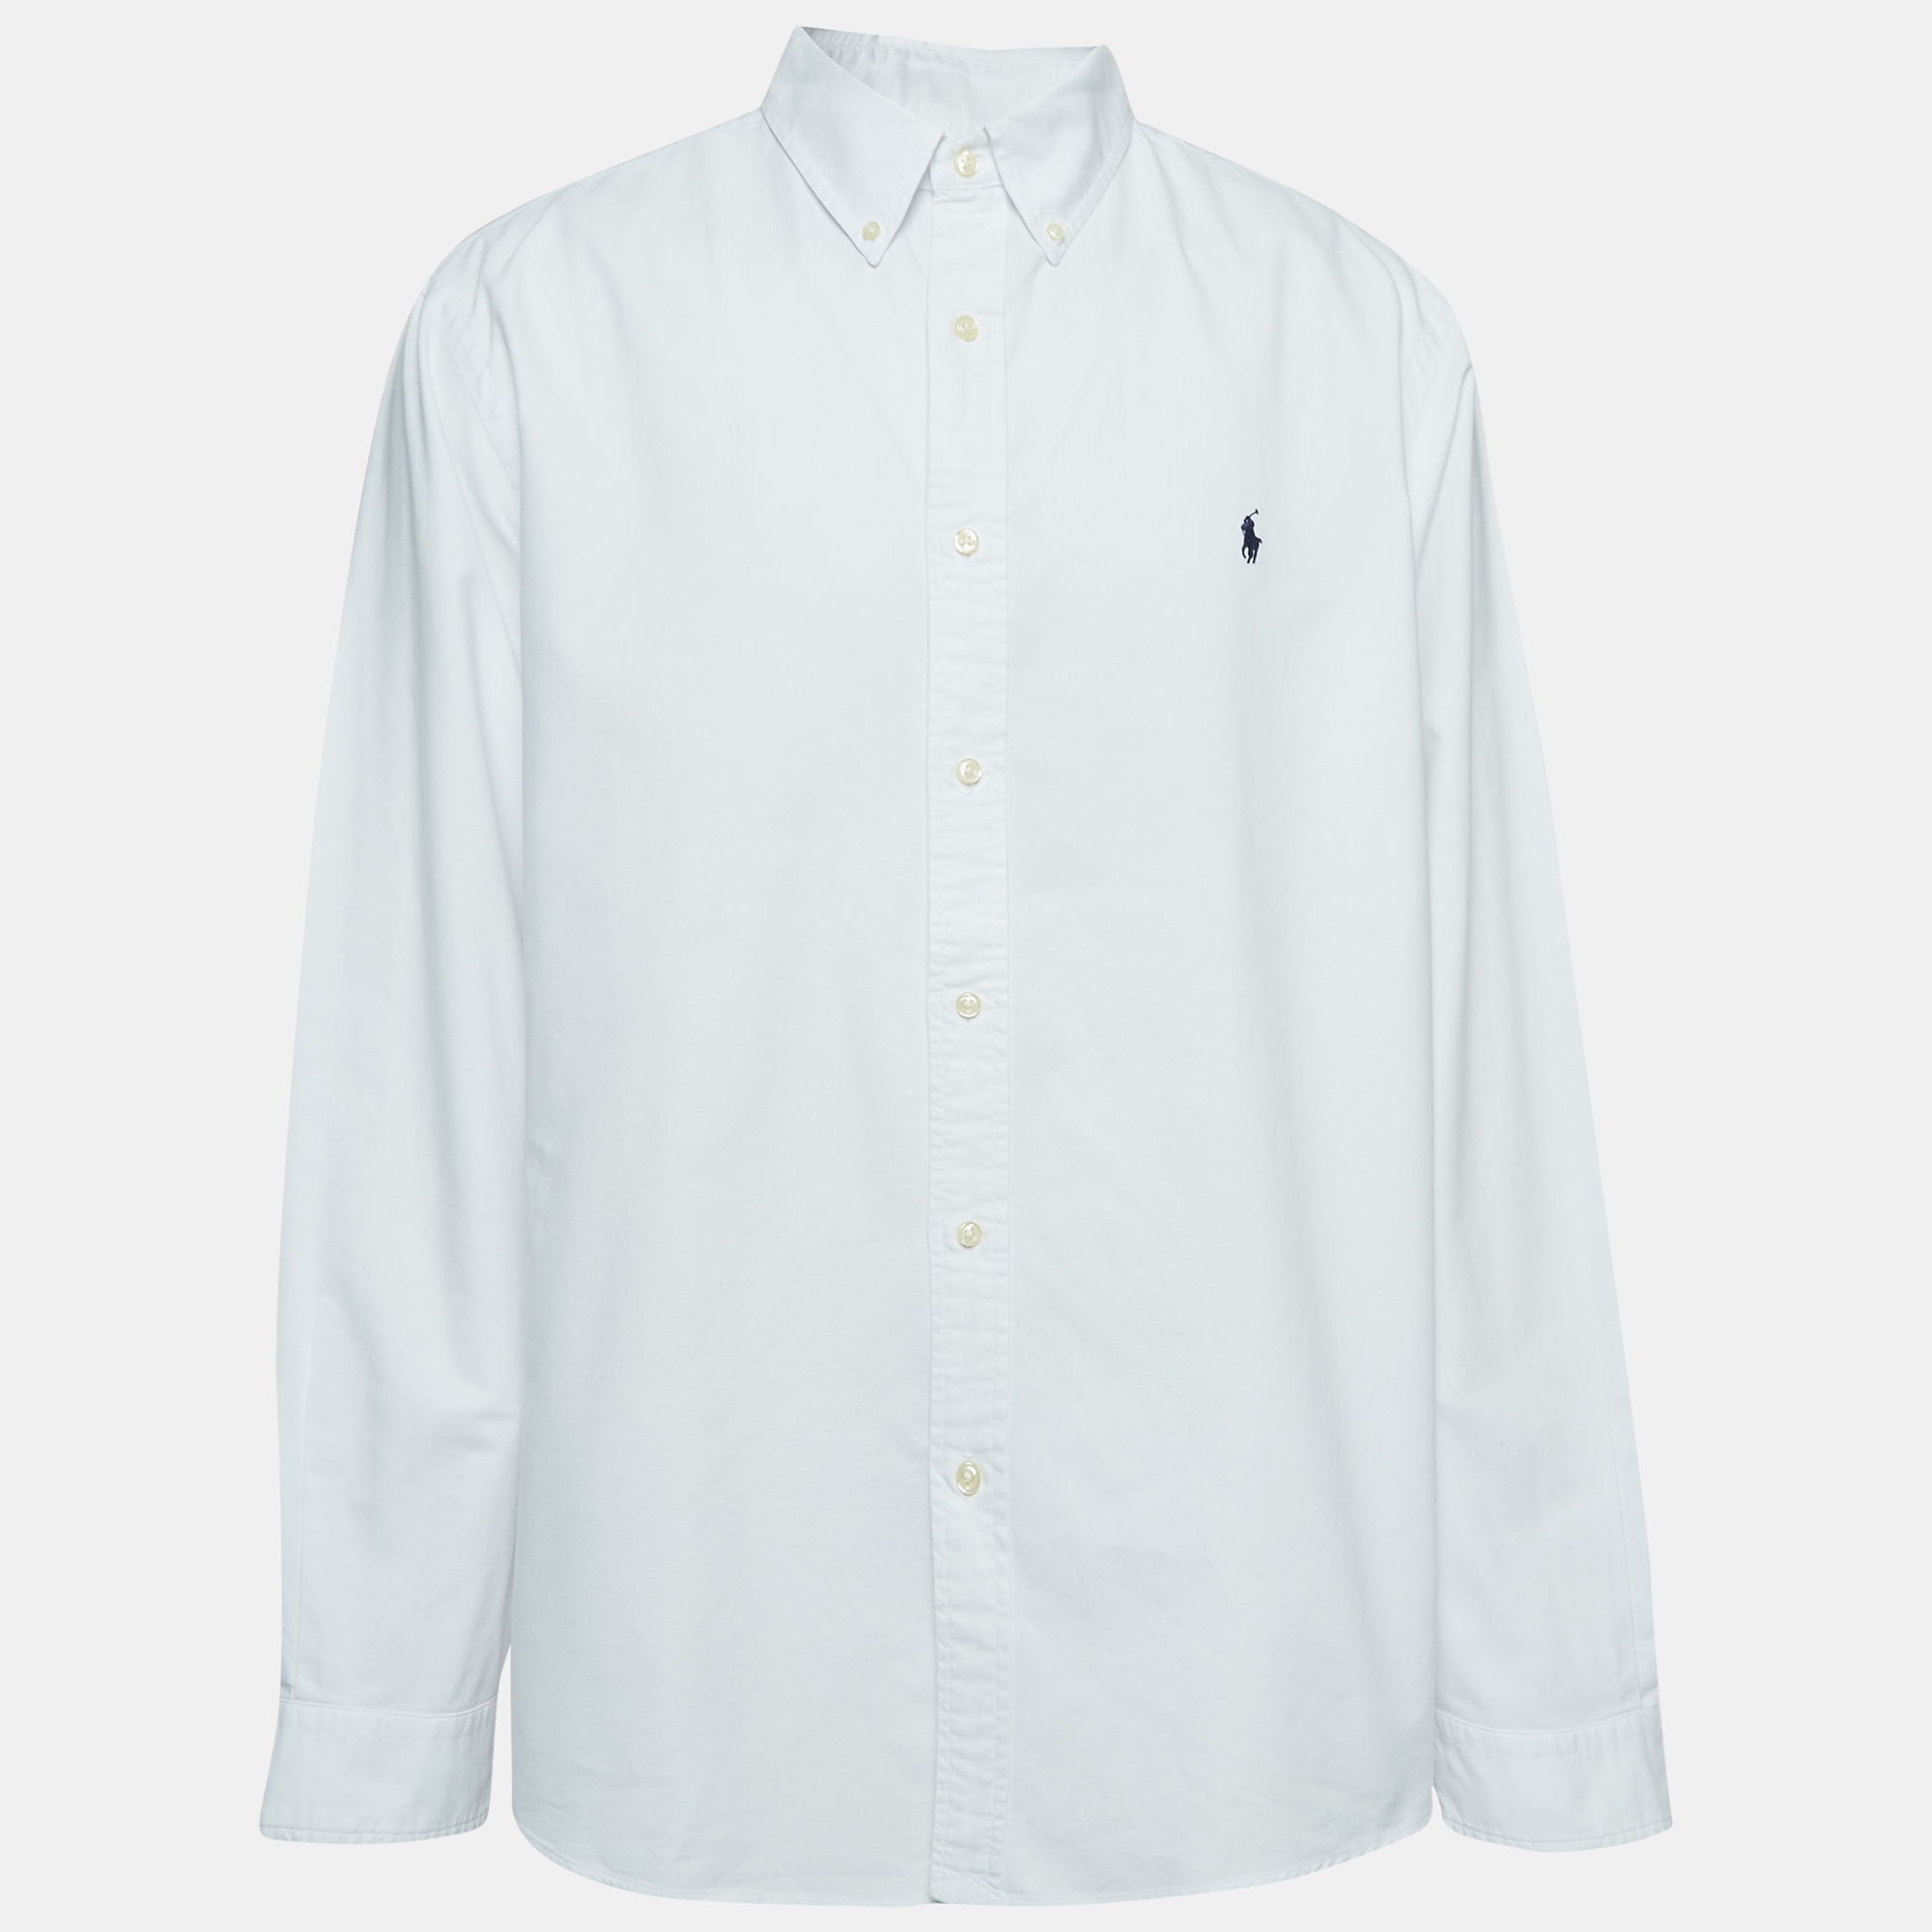 Ralph lauren white cotton custom fit shirt xxl